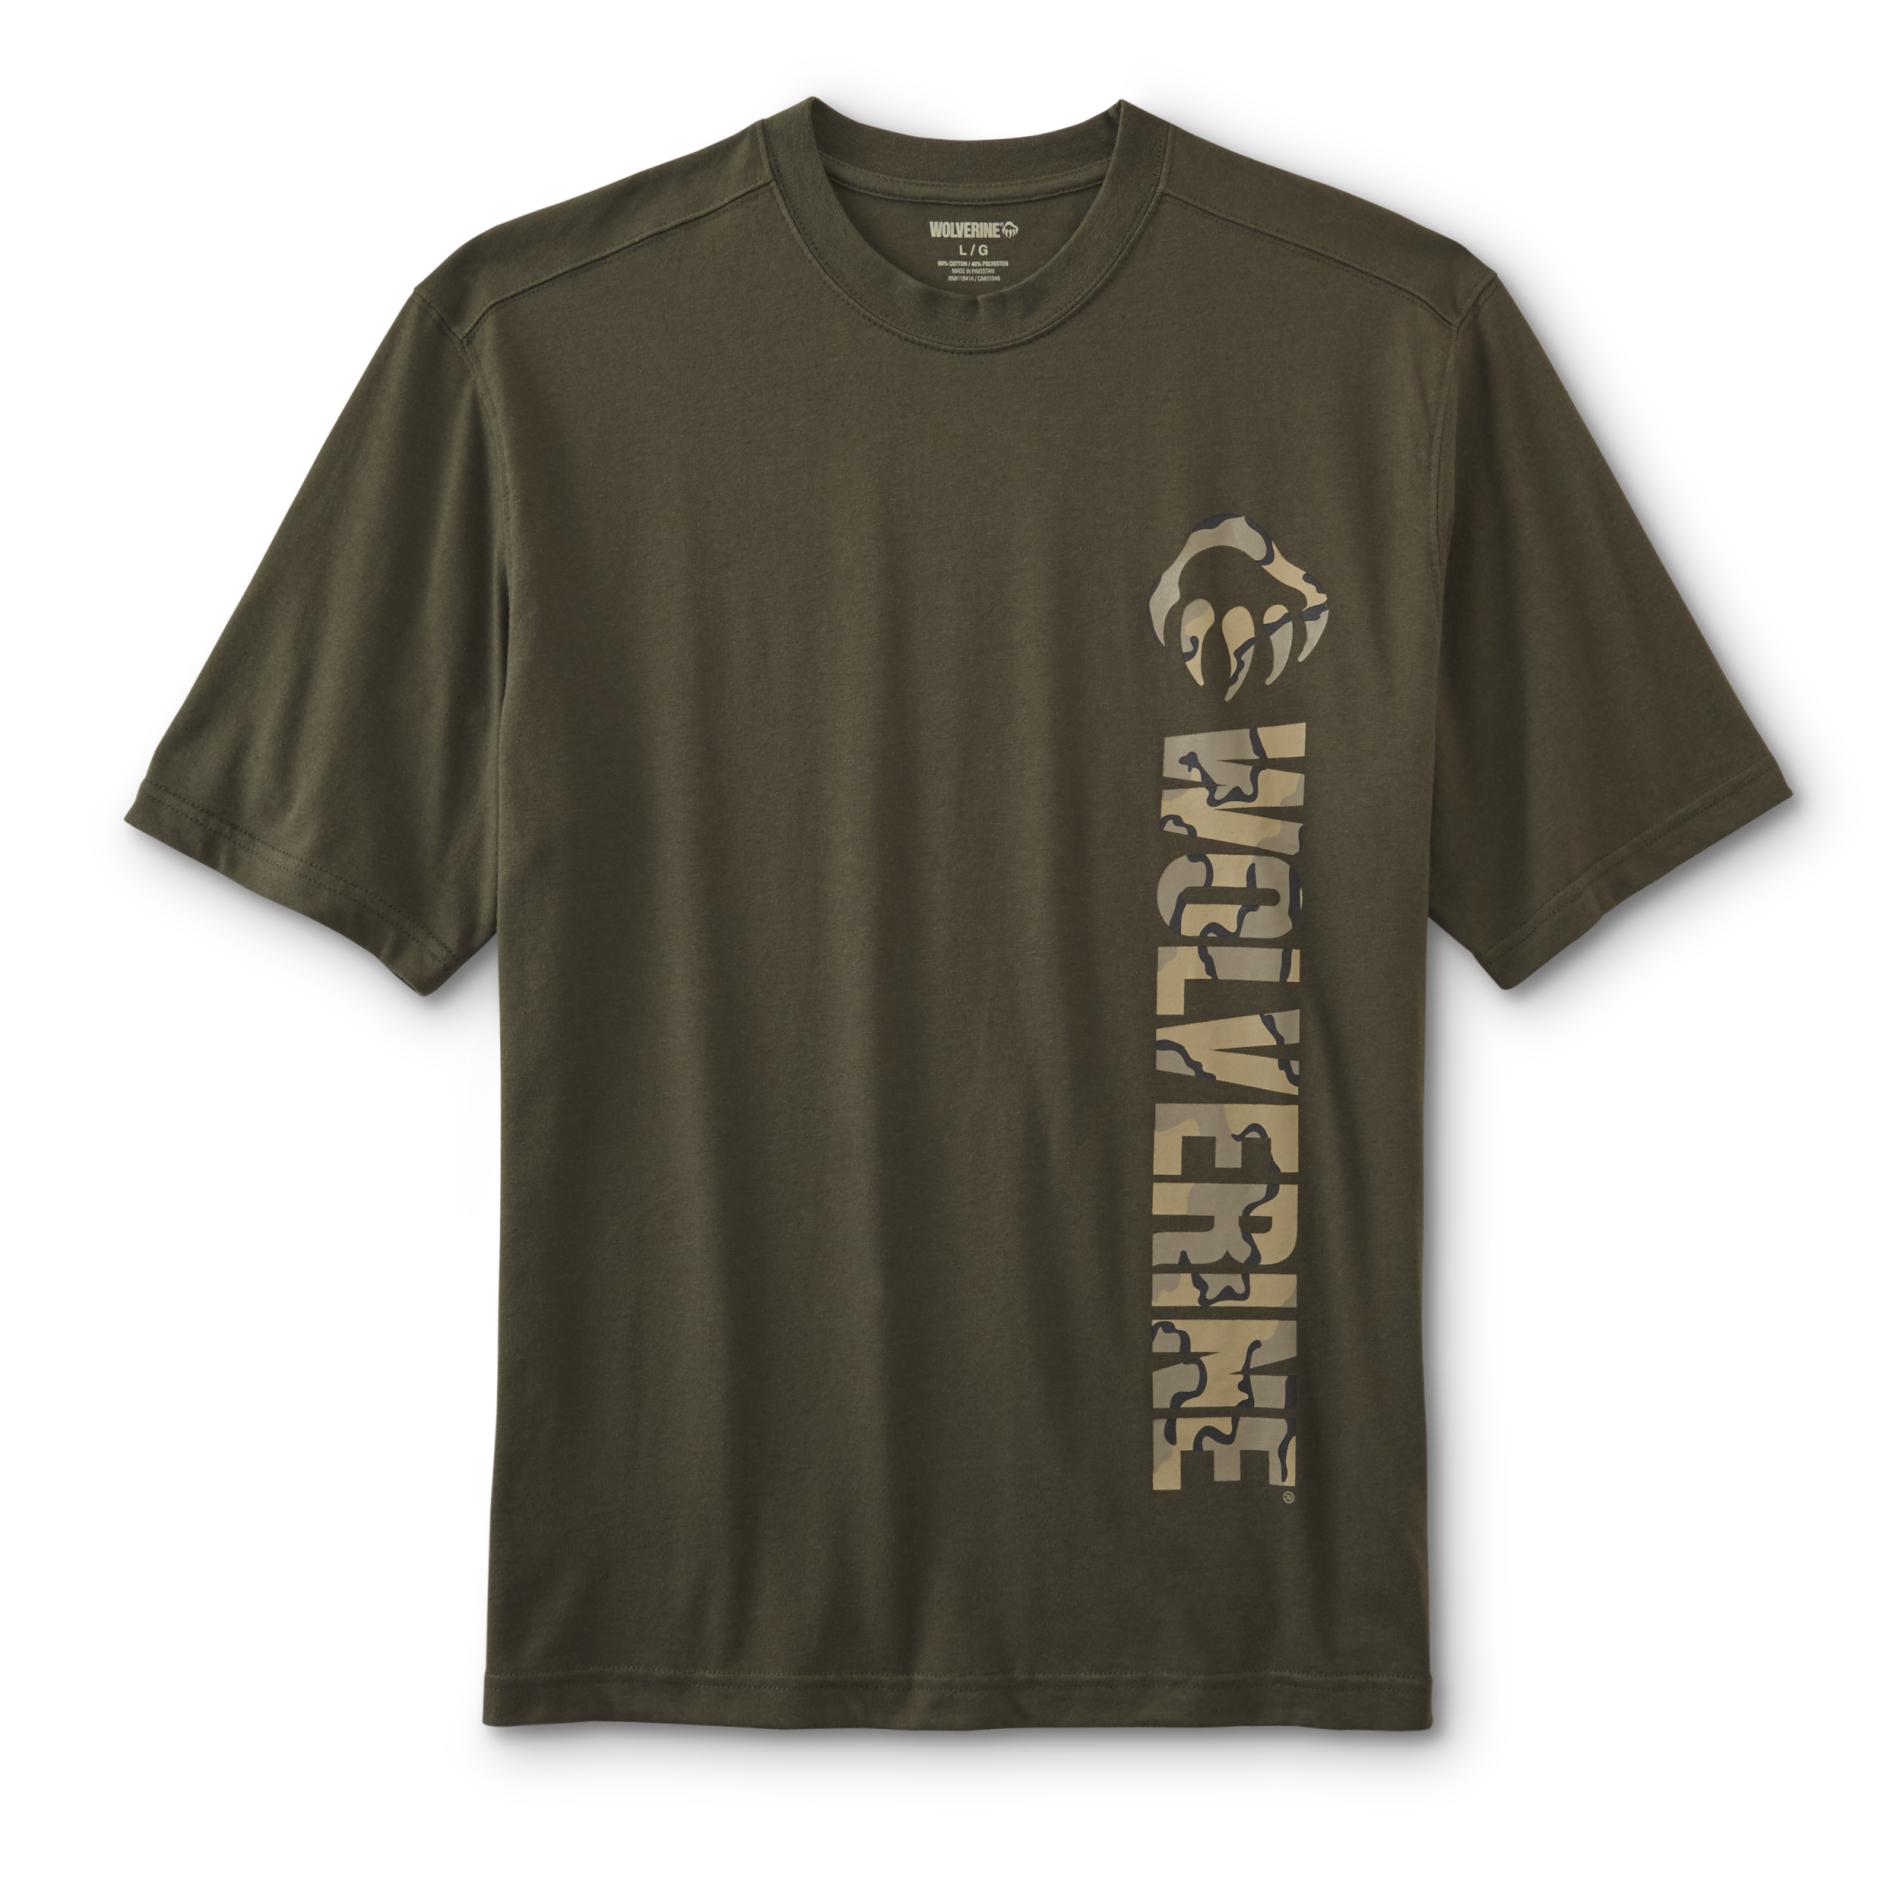 Wolverine Men's Graphic T-Shirt - Camouflage